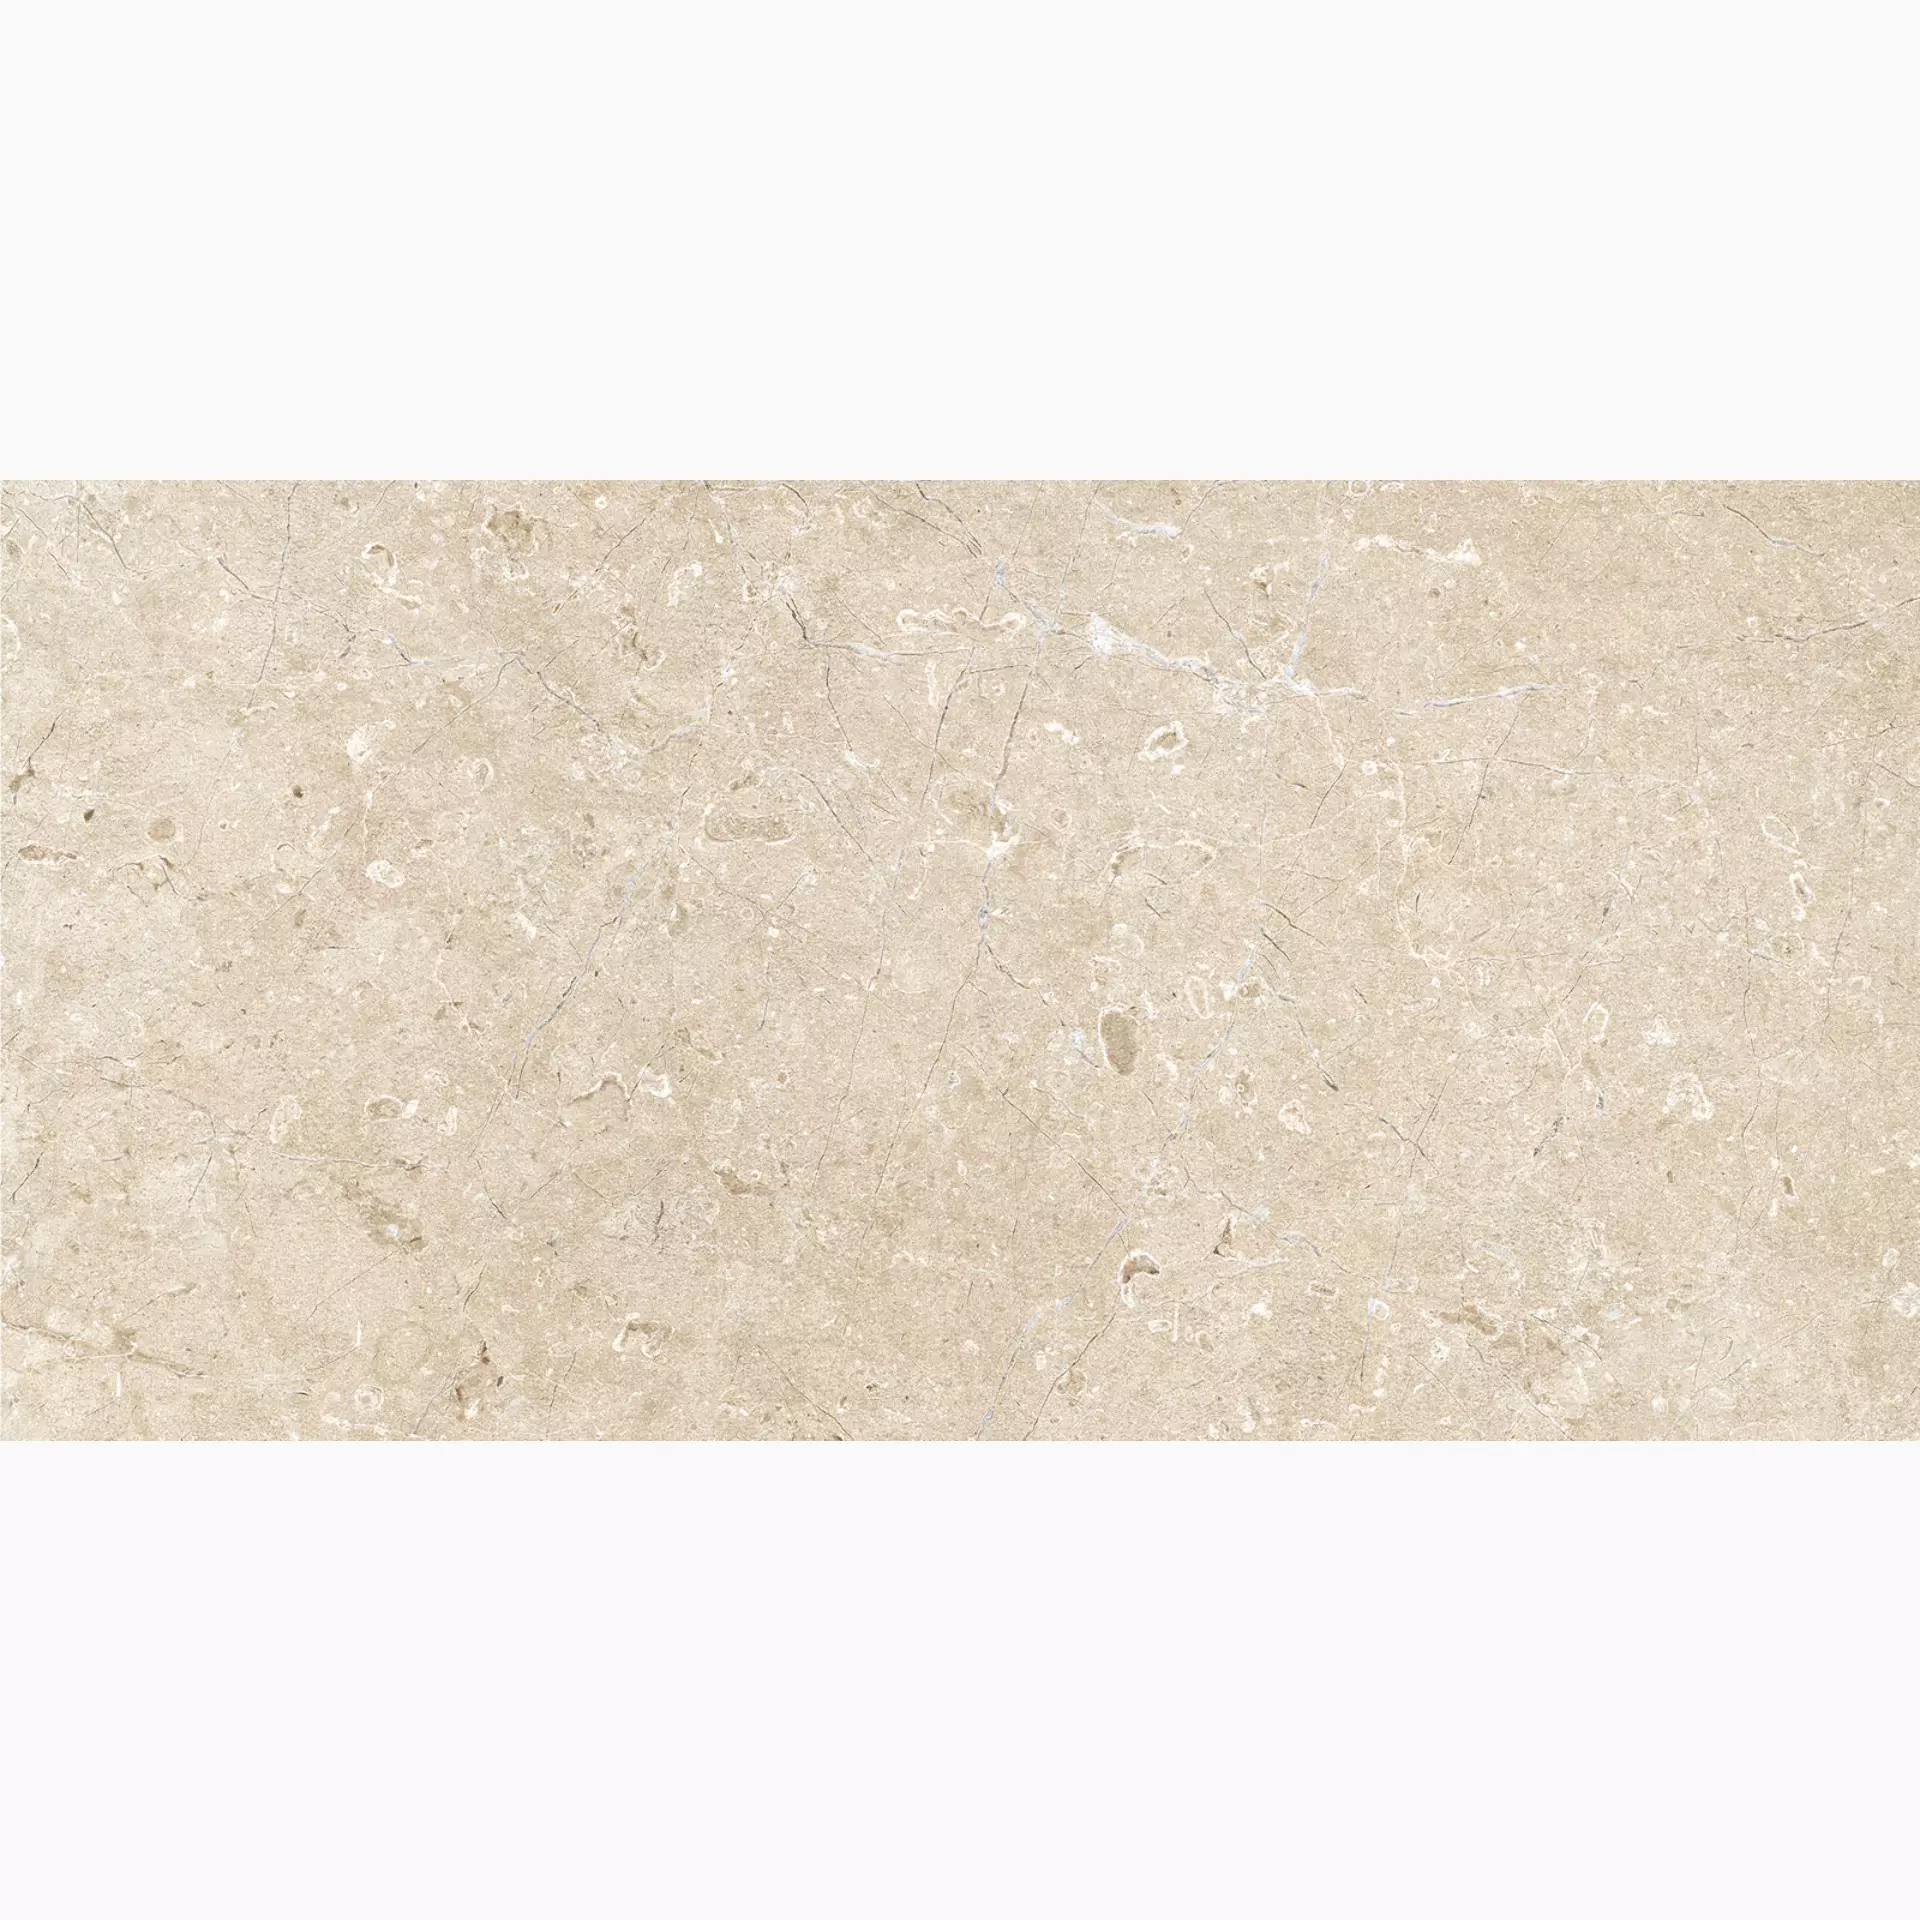 Marazzi Mystone Limestone Sand Strutturato M7ES 30x60cm rectified 10mm